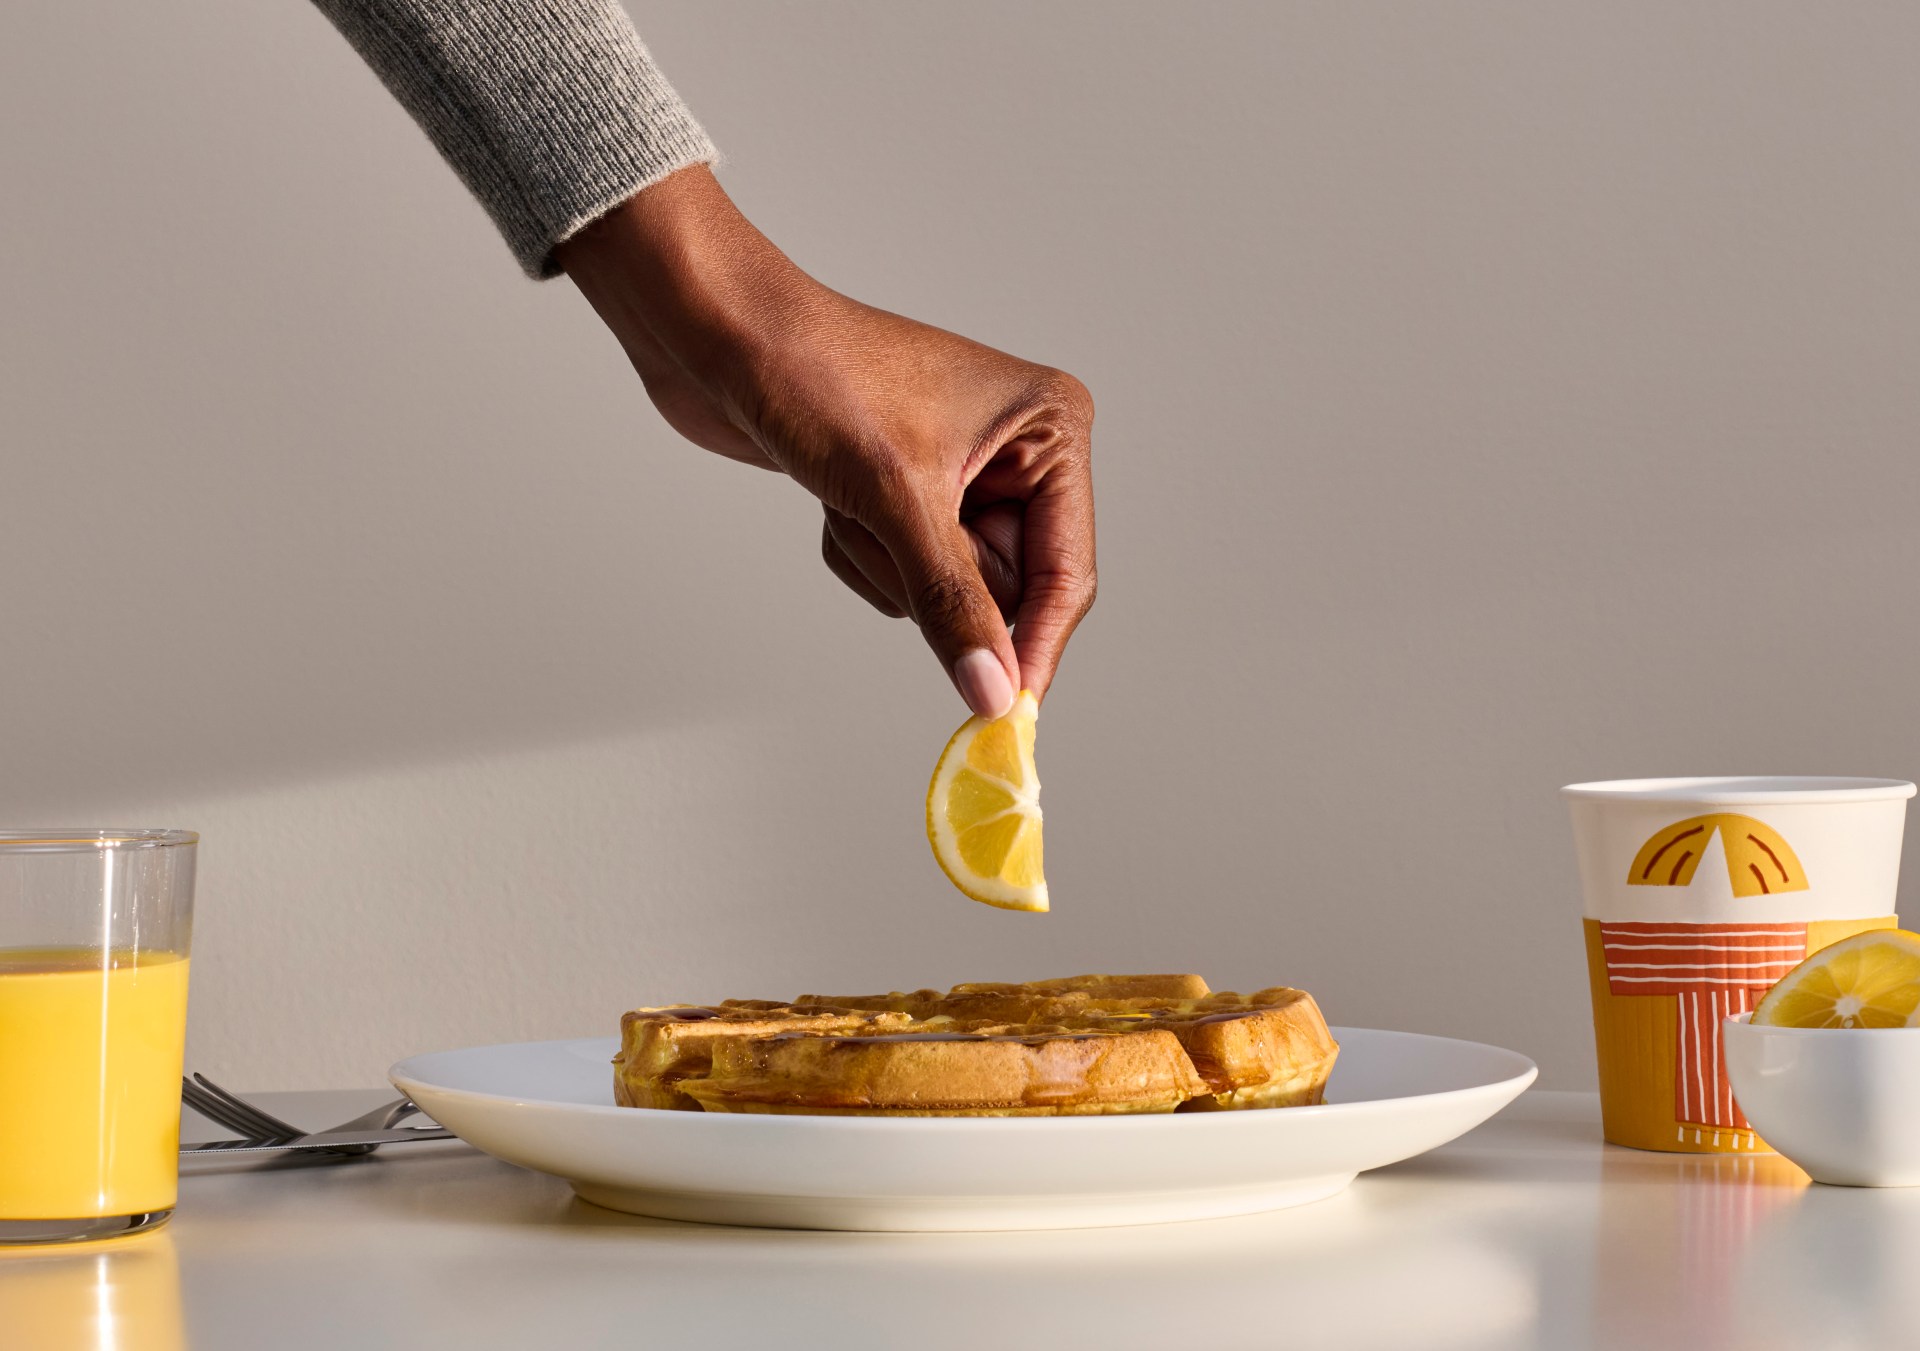 Hampton by Hilton Lemon Waffles - hand holding a lemon over a waffle and breakfast spread